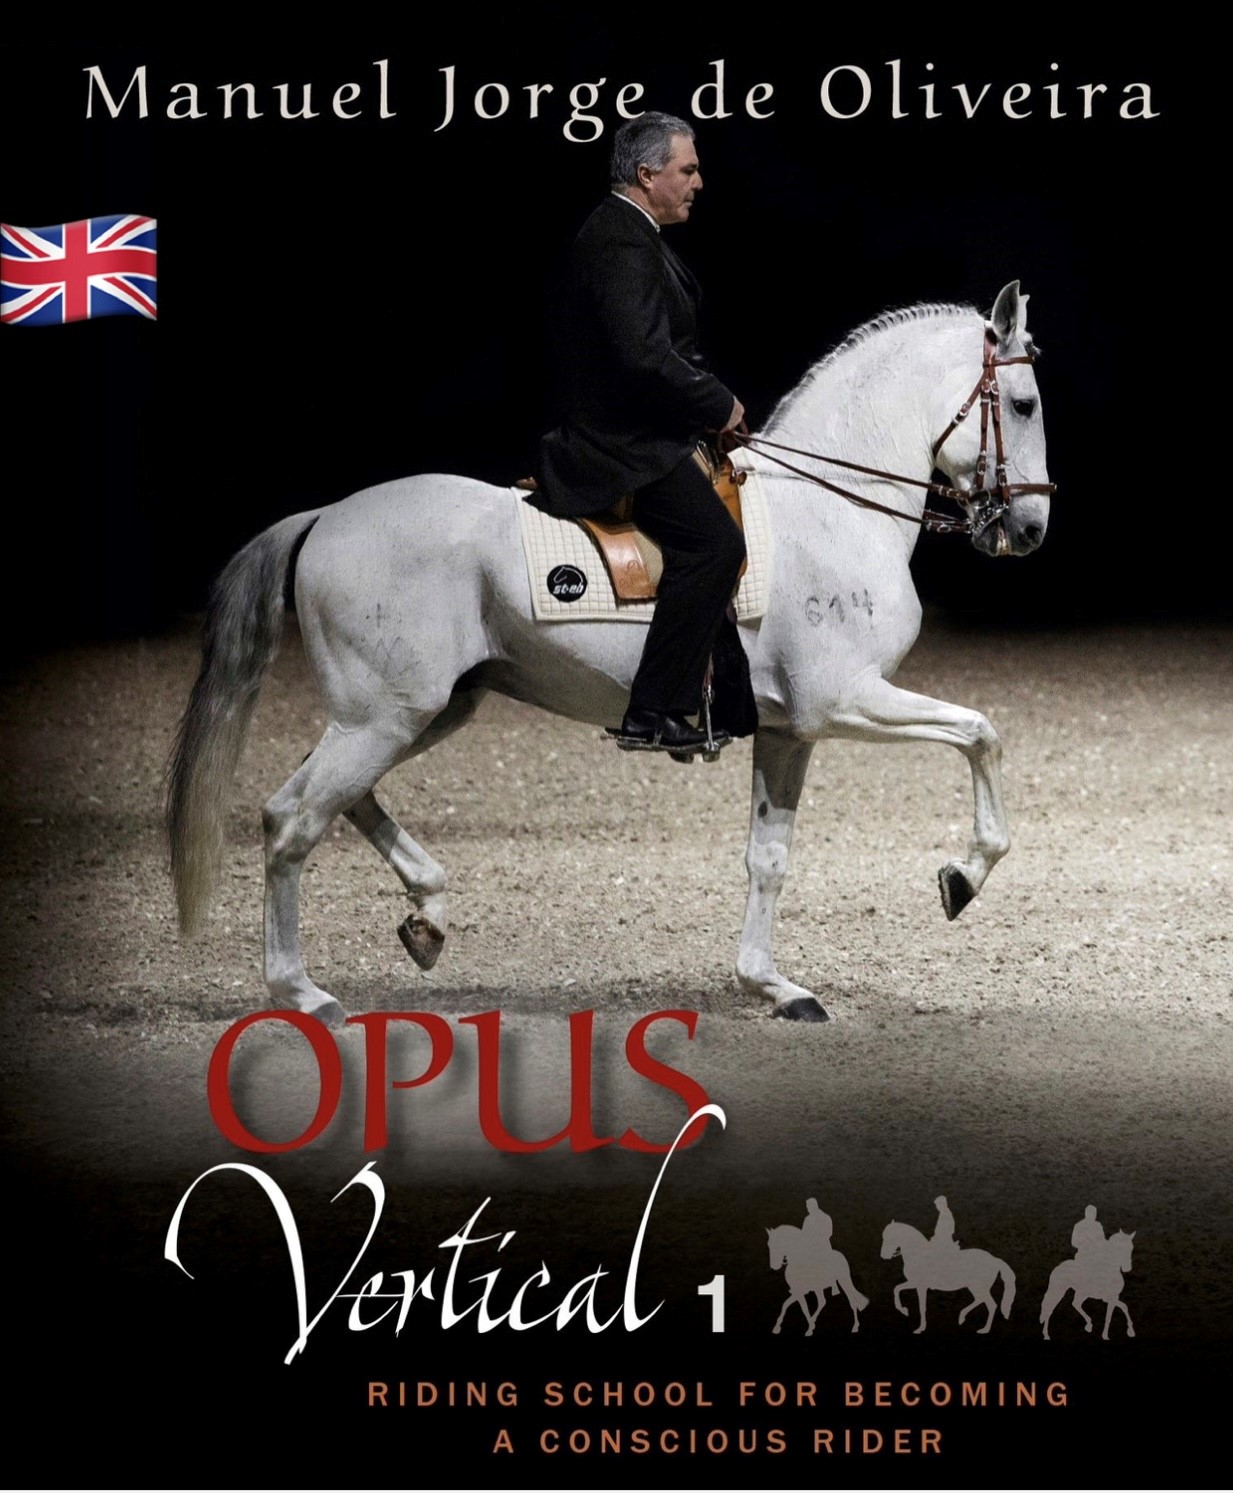 Watch online "Opus Vertical 1" ENGLISH